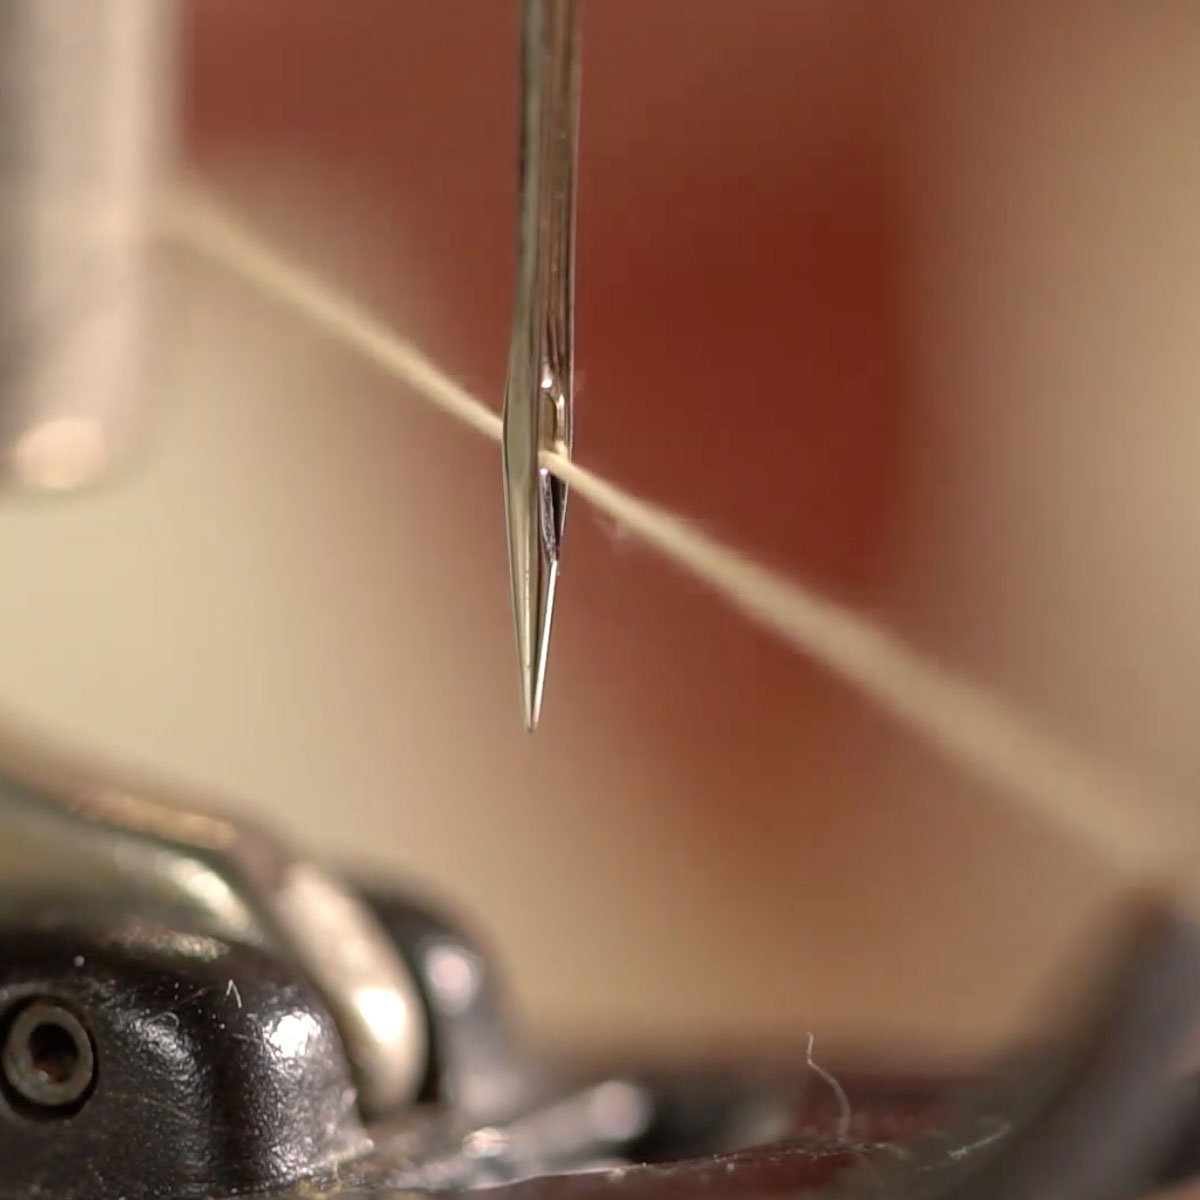 A machine needle threaded closeup